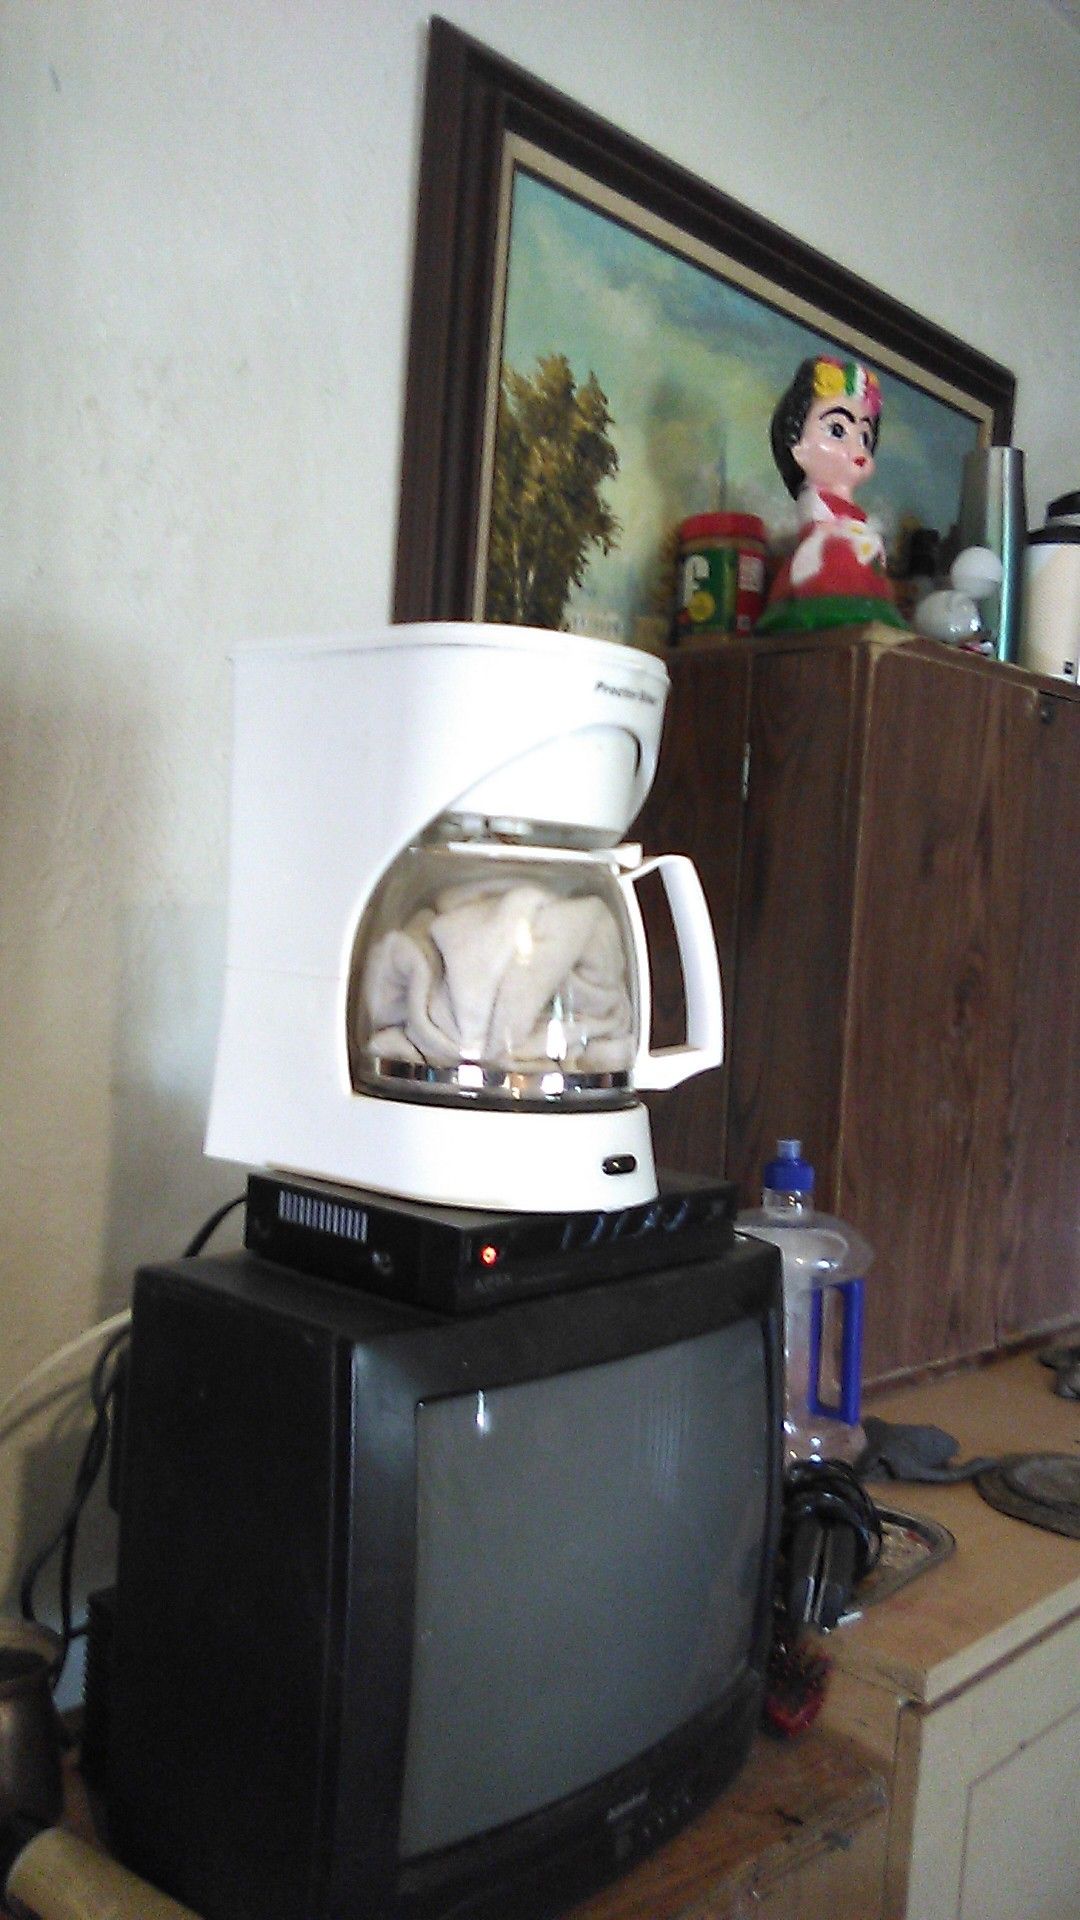 Procter silex coffee maker